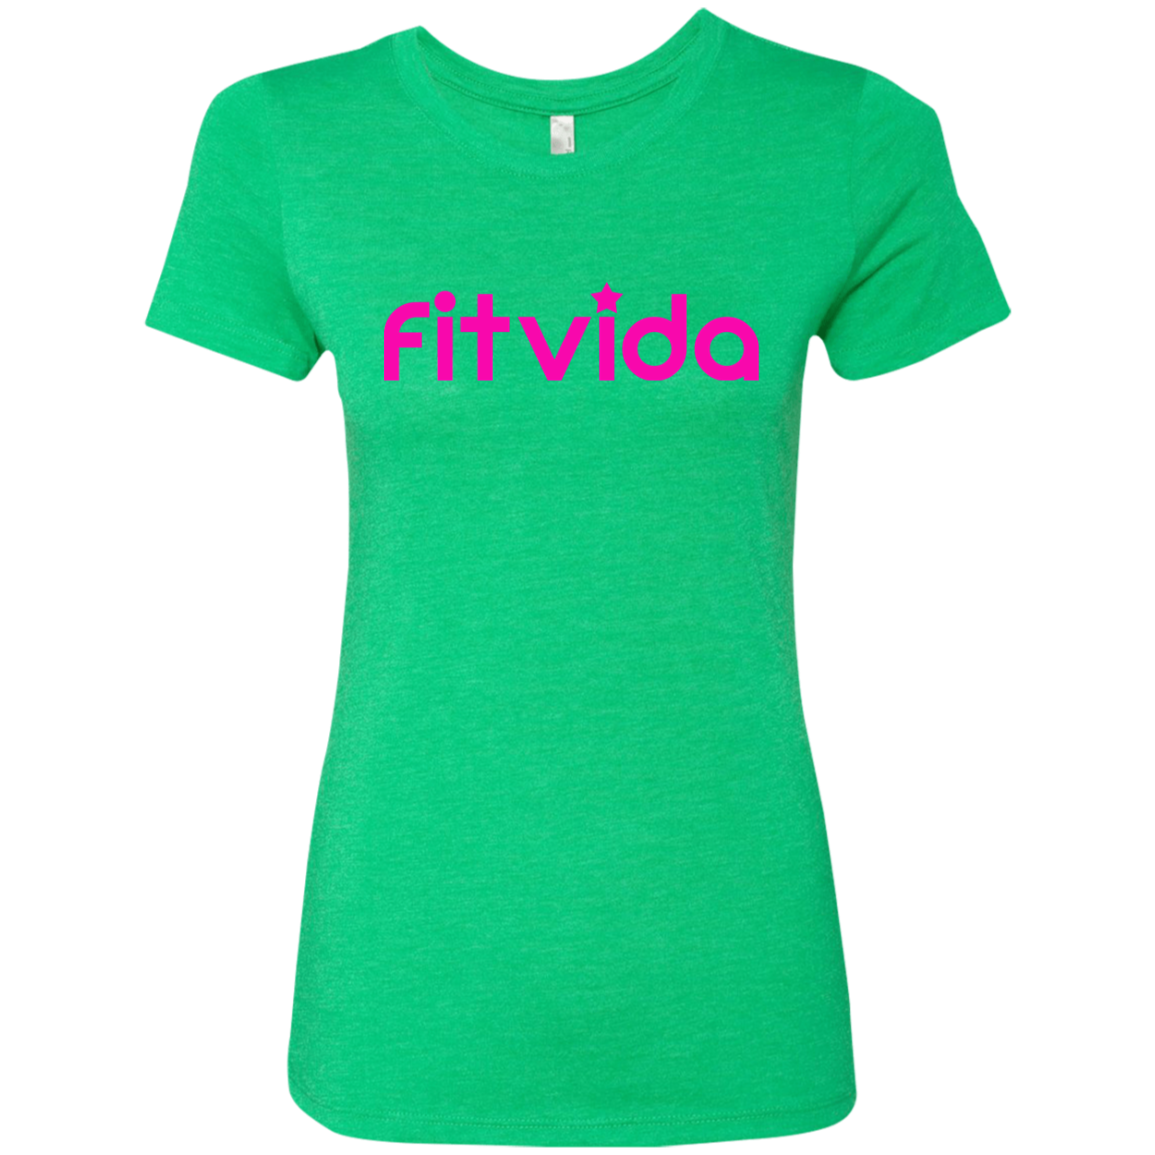 FITVIDA NL6710 Next Level Ladies' Triblend T-Shirt